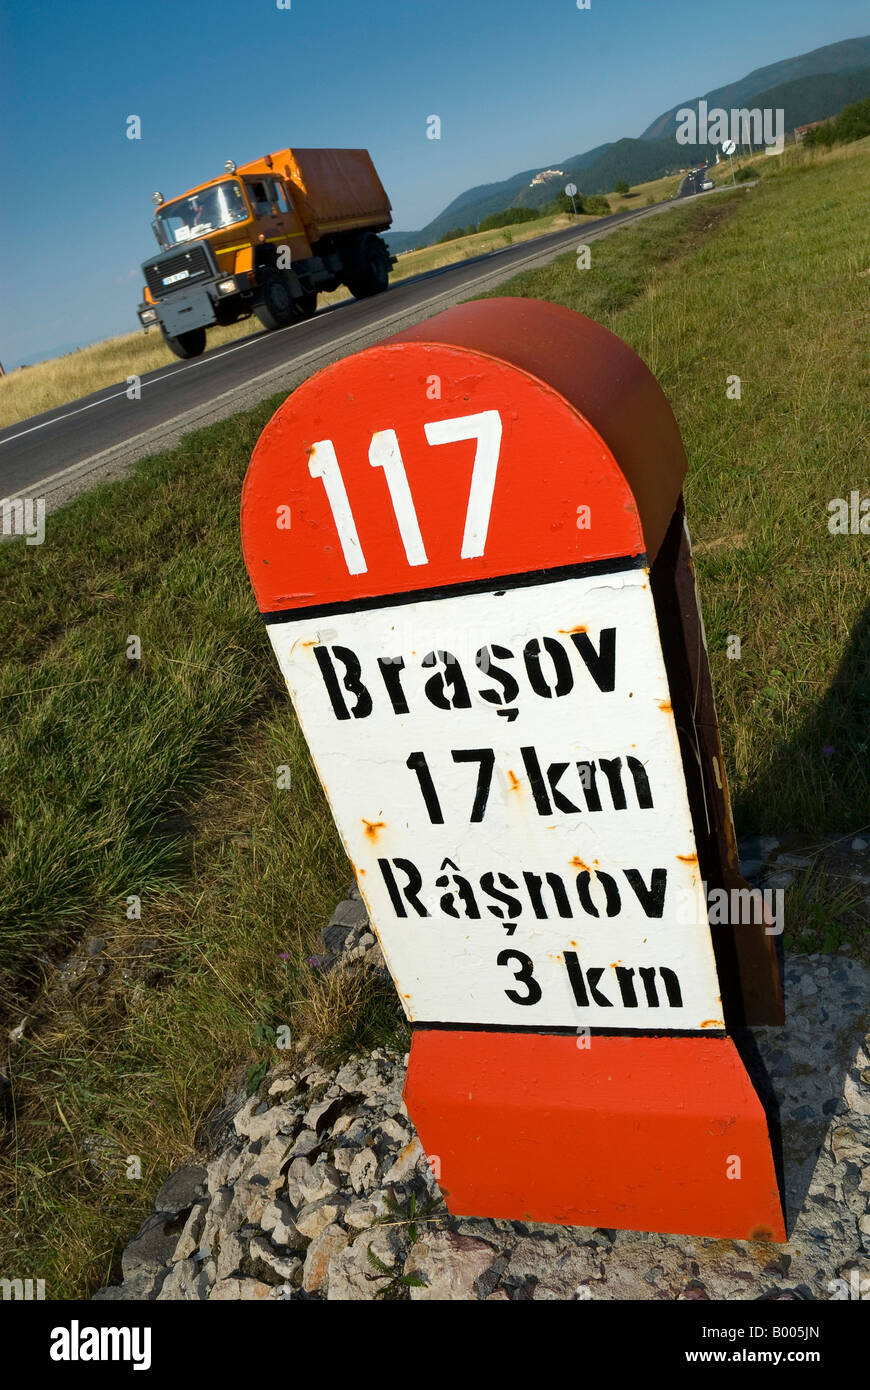 TRAFFIC SIGN INDICATE INFORMATION OF BRASOV, TRANSYLVANIA, RUMANIA.  ROAD KM 17 Stock Photo